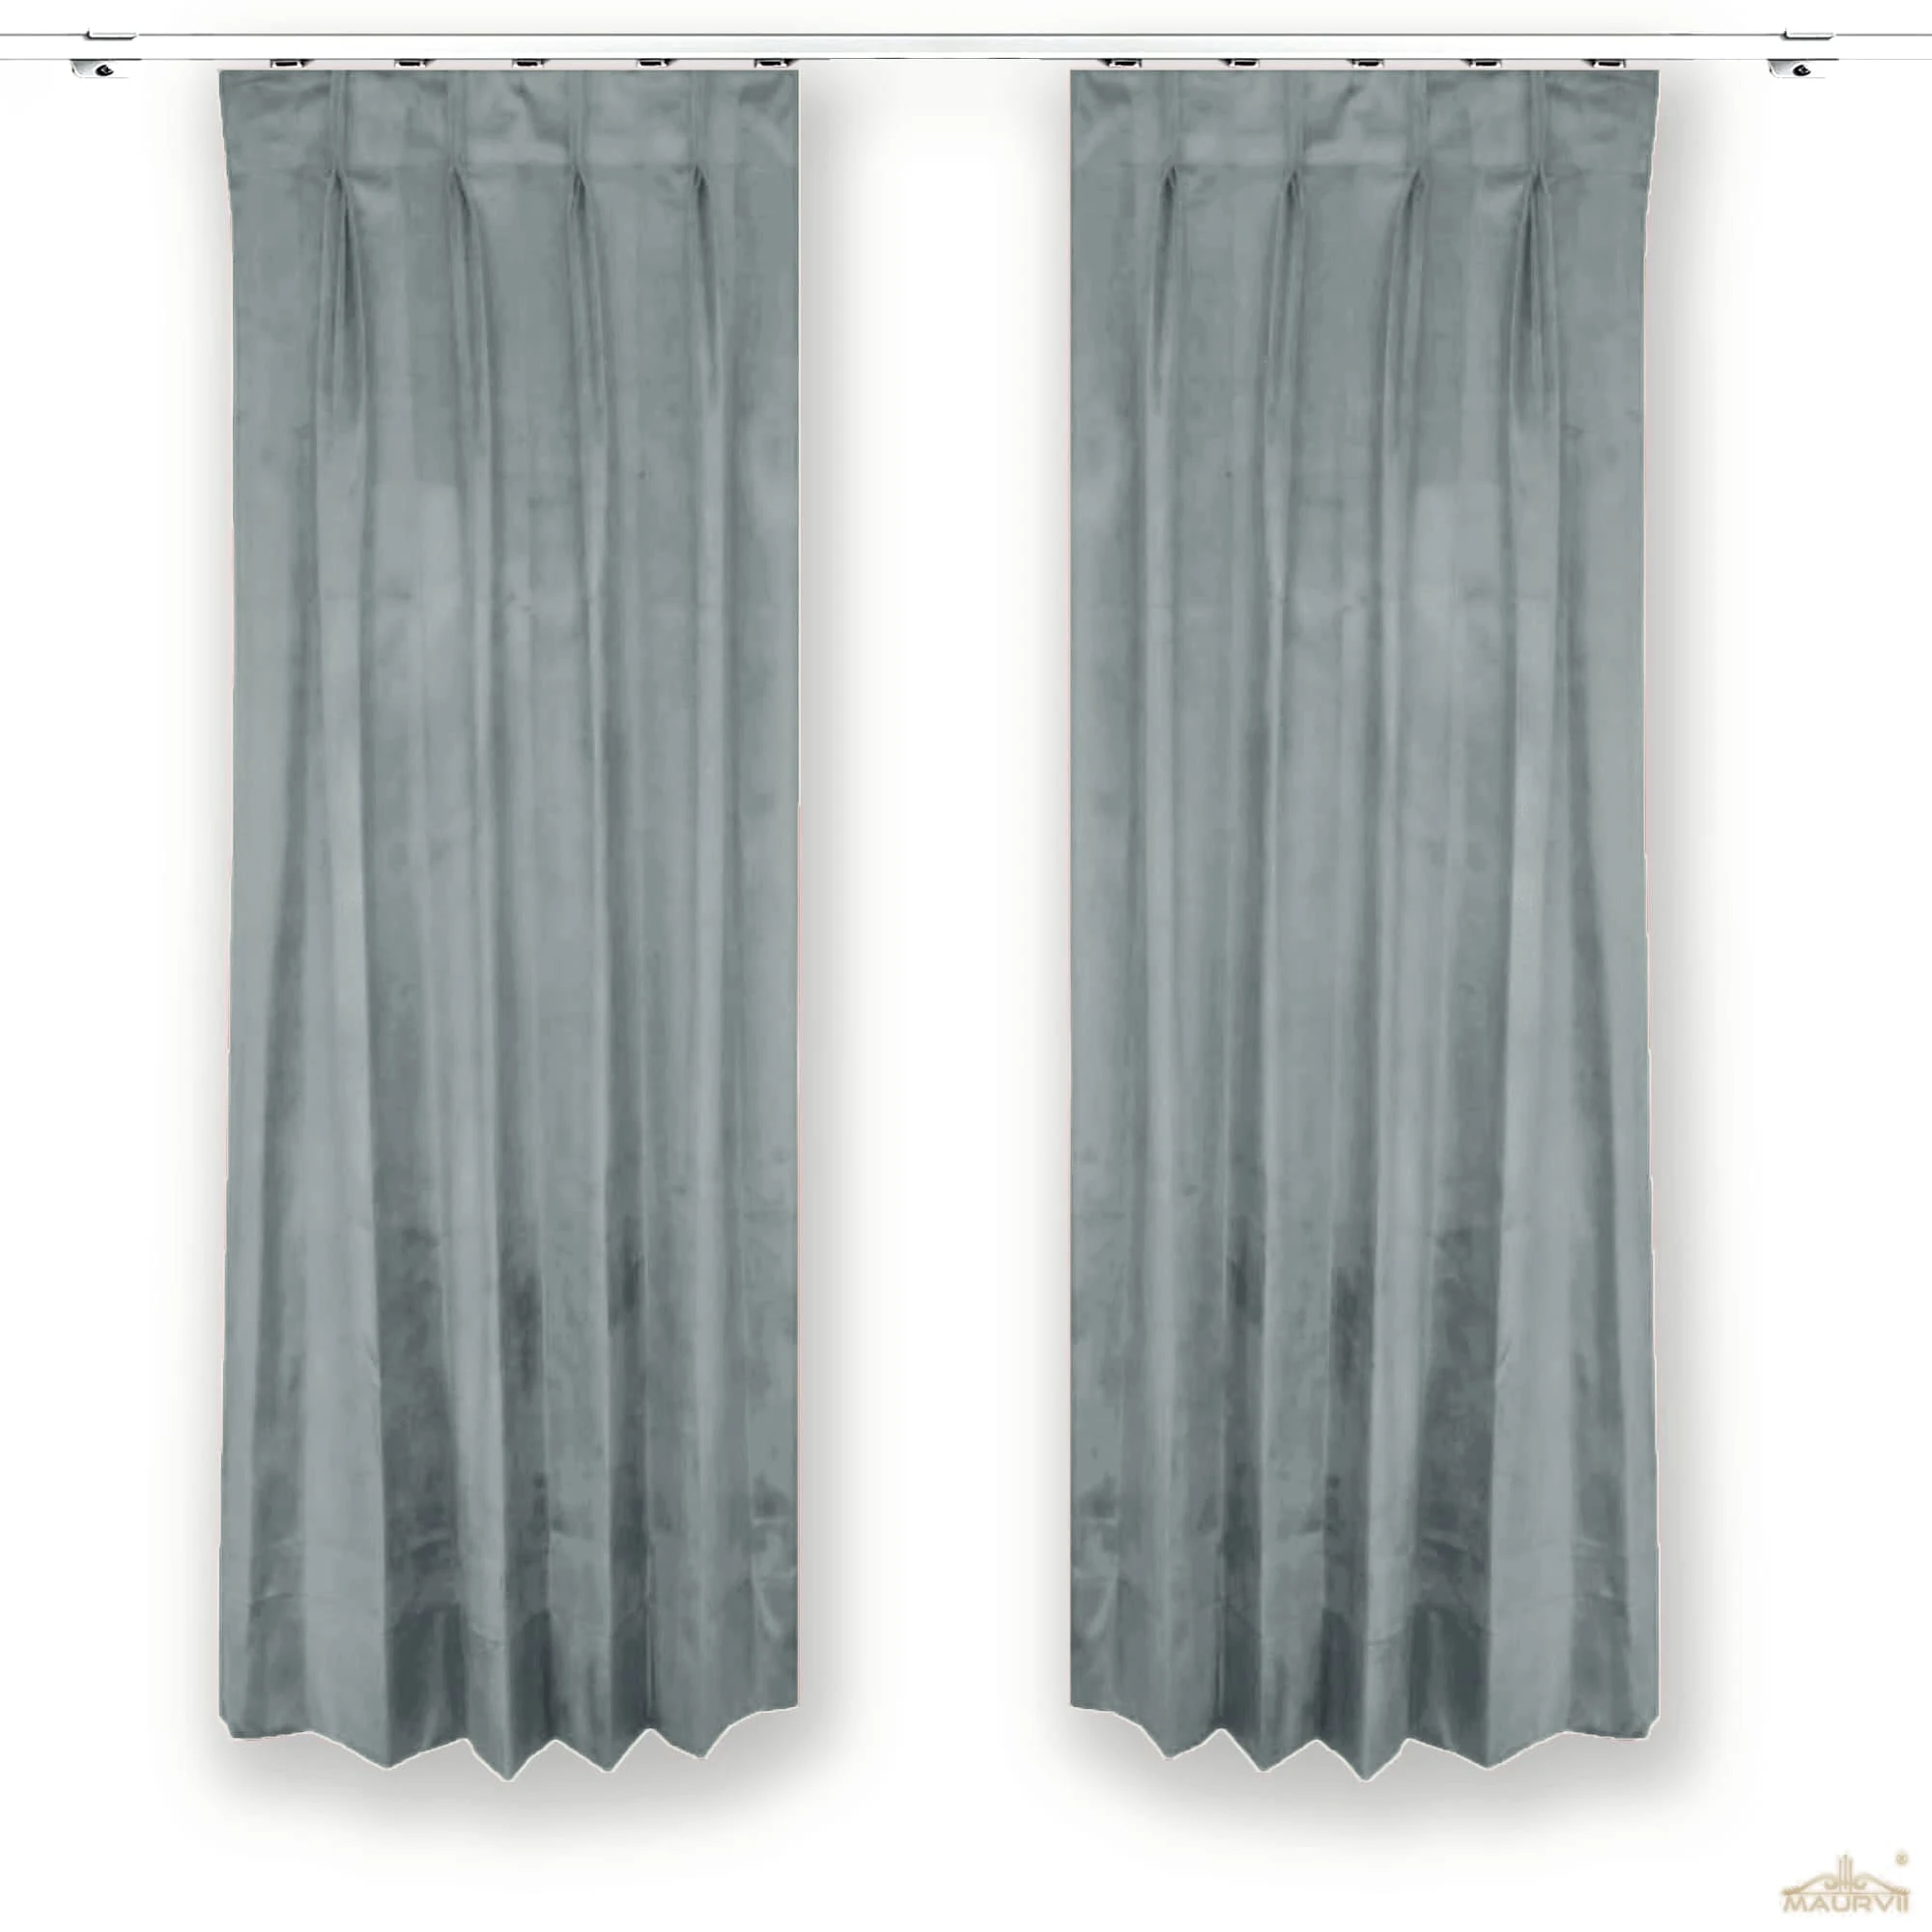 Grey room curtains